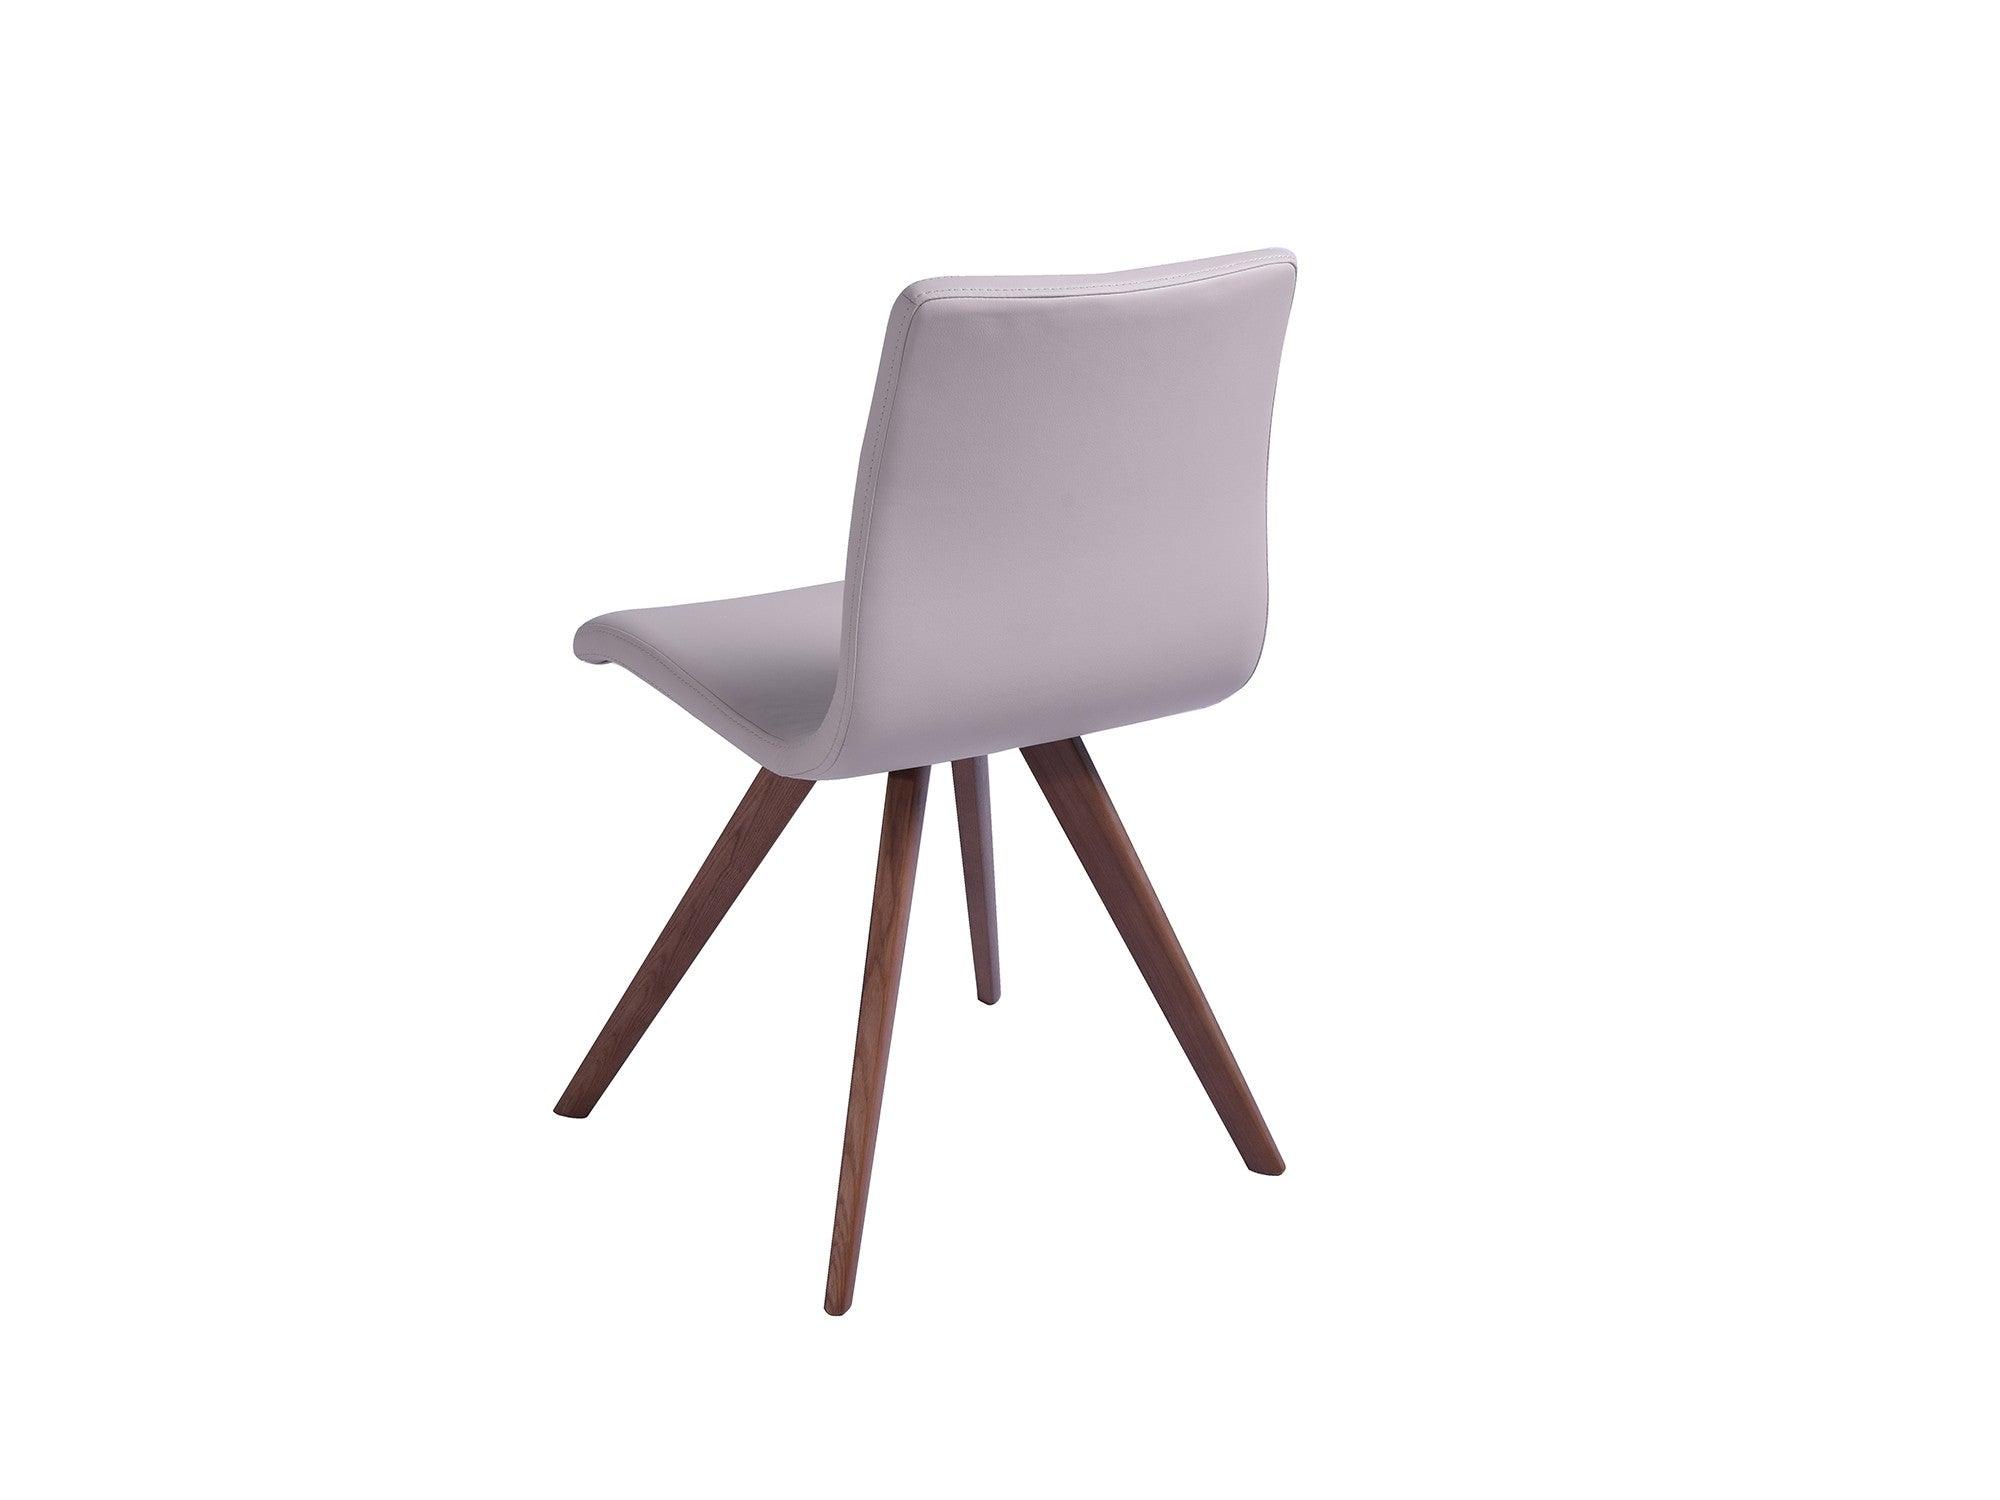 Omega Black Dining Chair - Euro Living Furniture